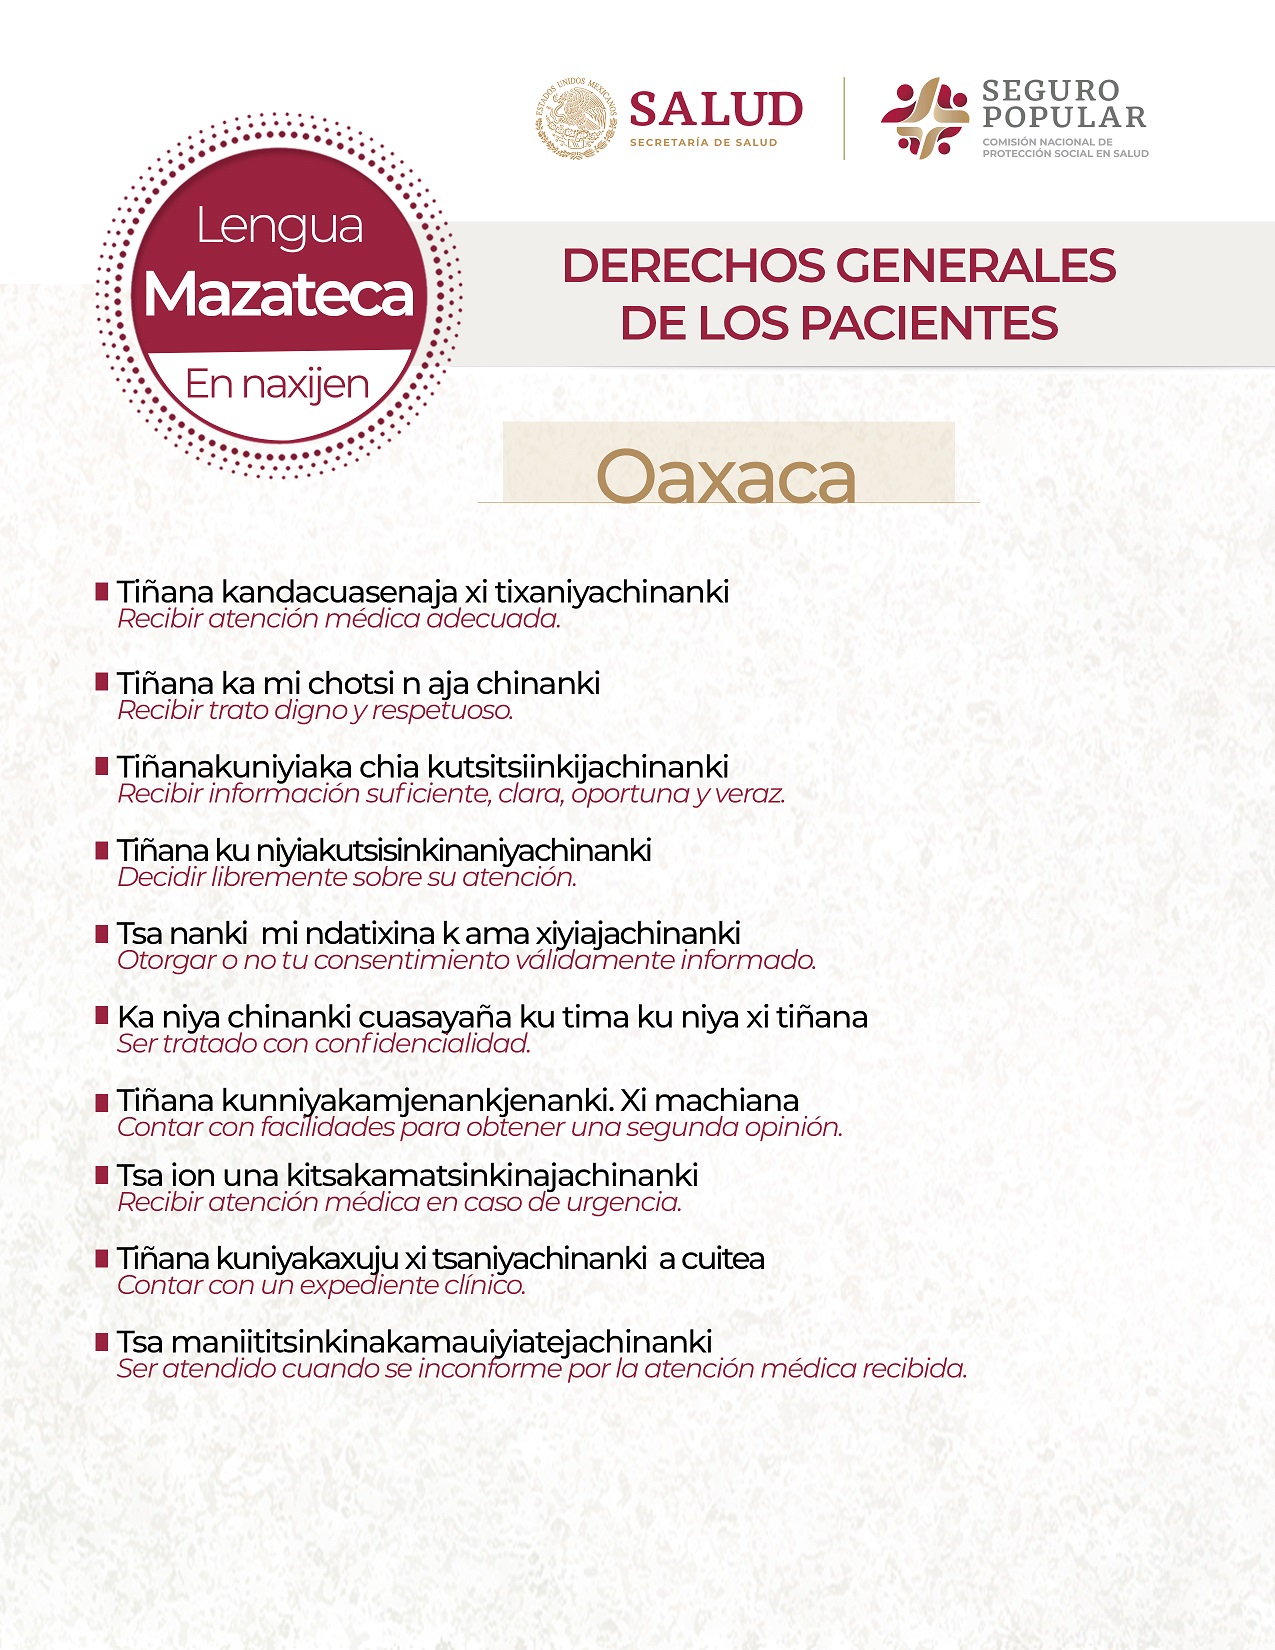 /cms/uploads/image/file/541116/Lengua-Mazateca-Oaxaca_traducido.jpg